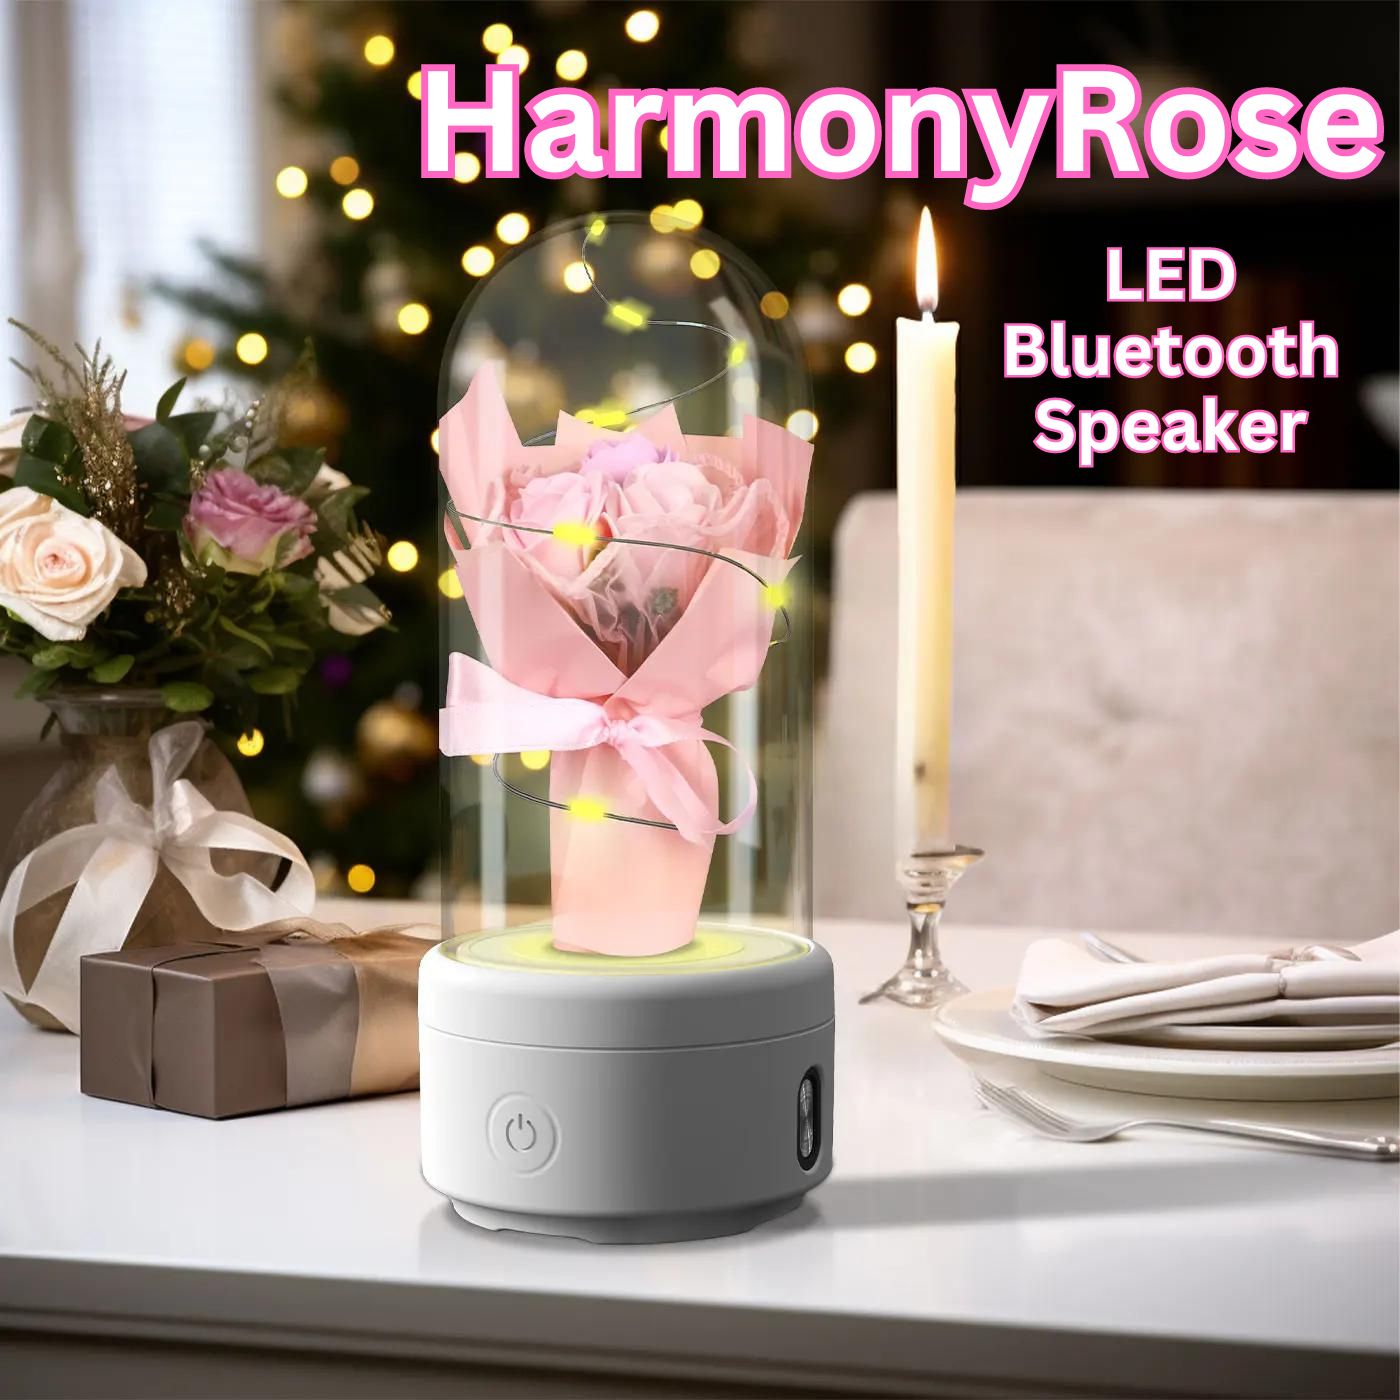 HarmonyRose LED Bluetooth Speaker Flower Bouquet - Mother's Day Gift